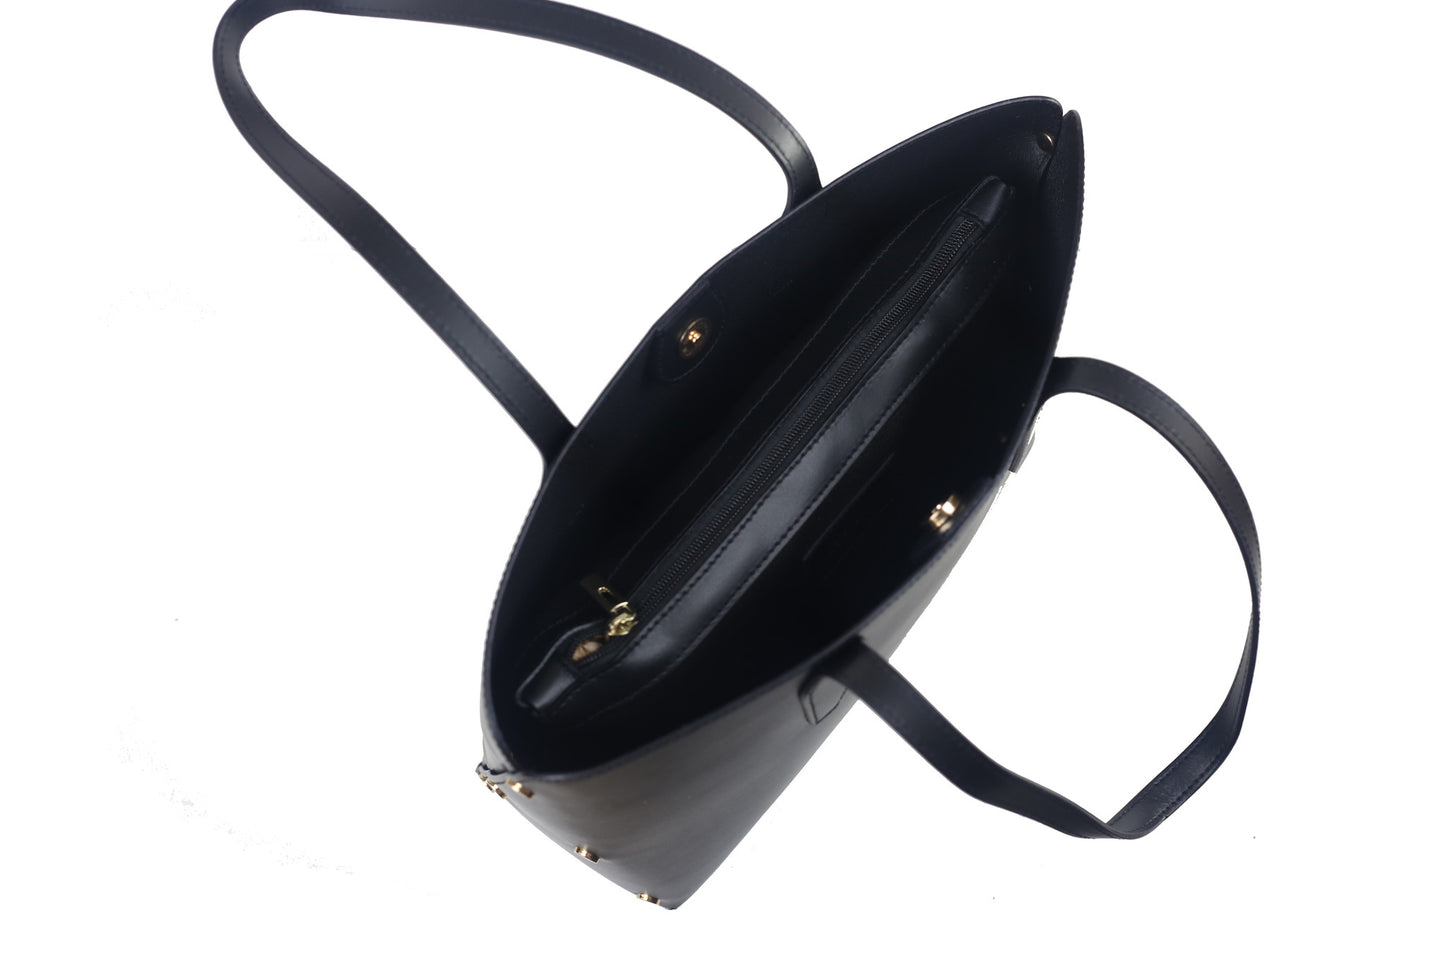 Gavriella black studded leather shopper bag - ELEARIA